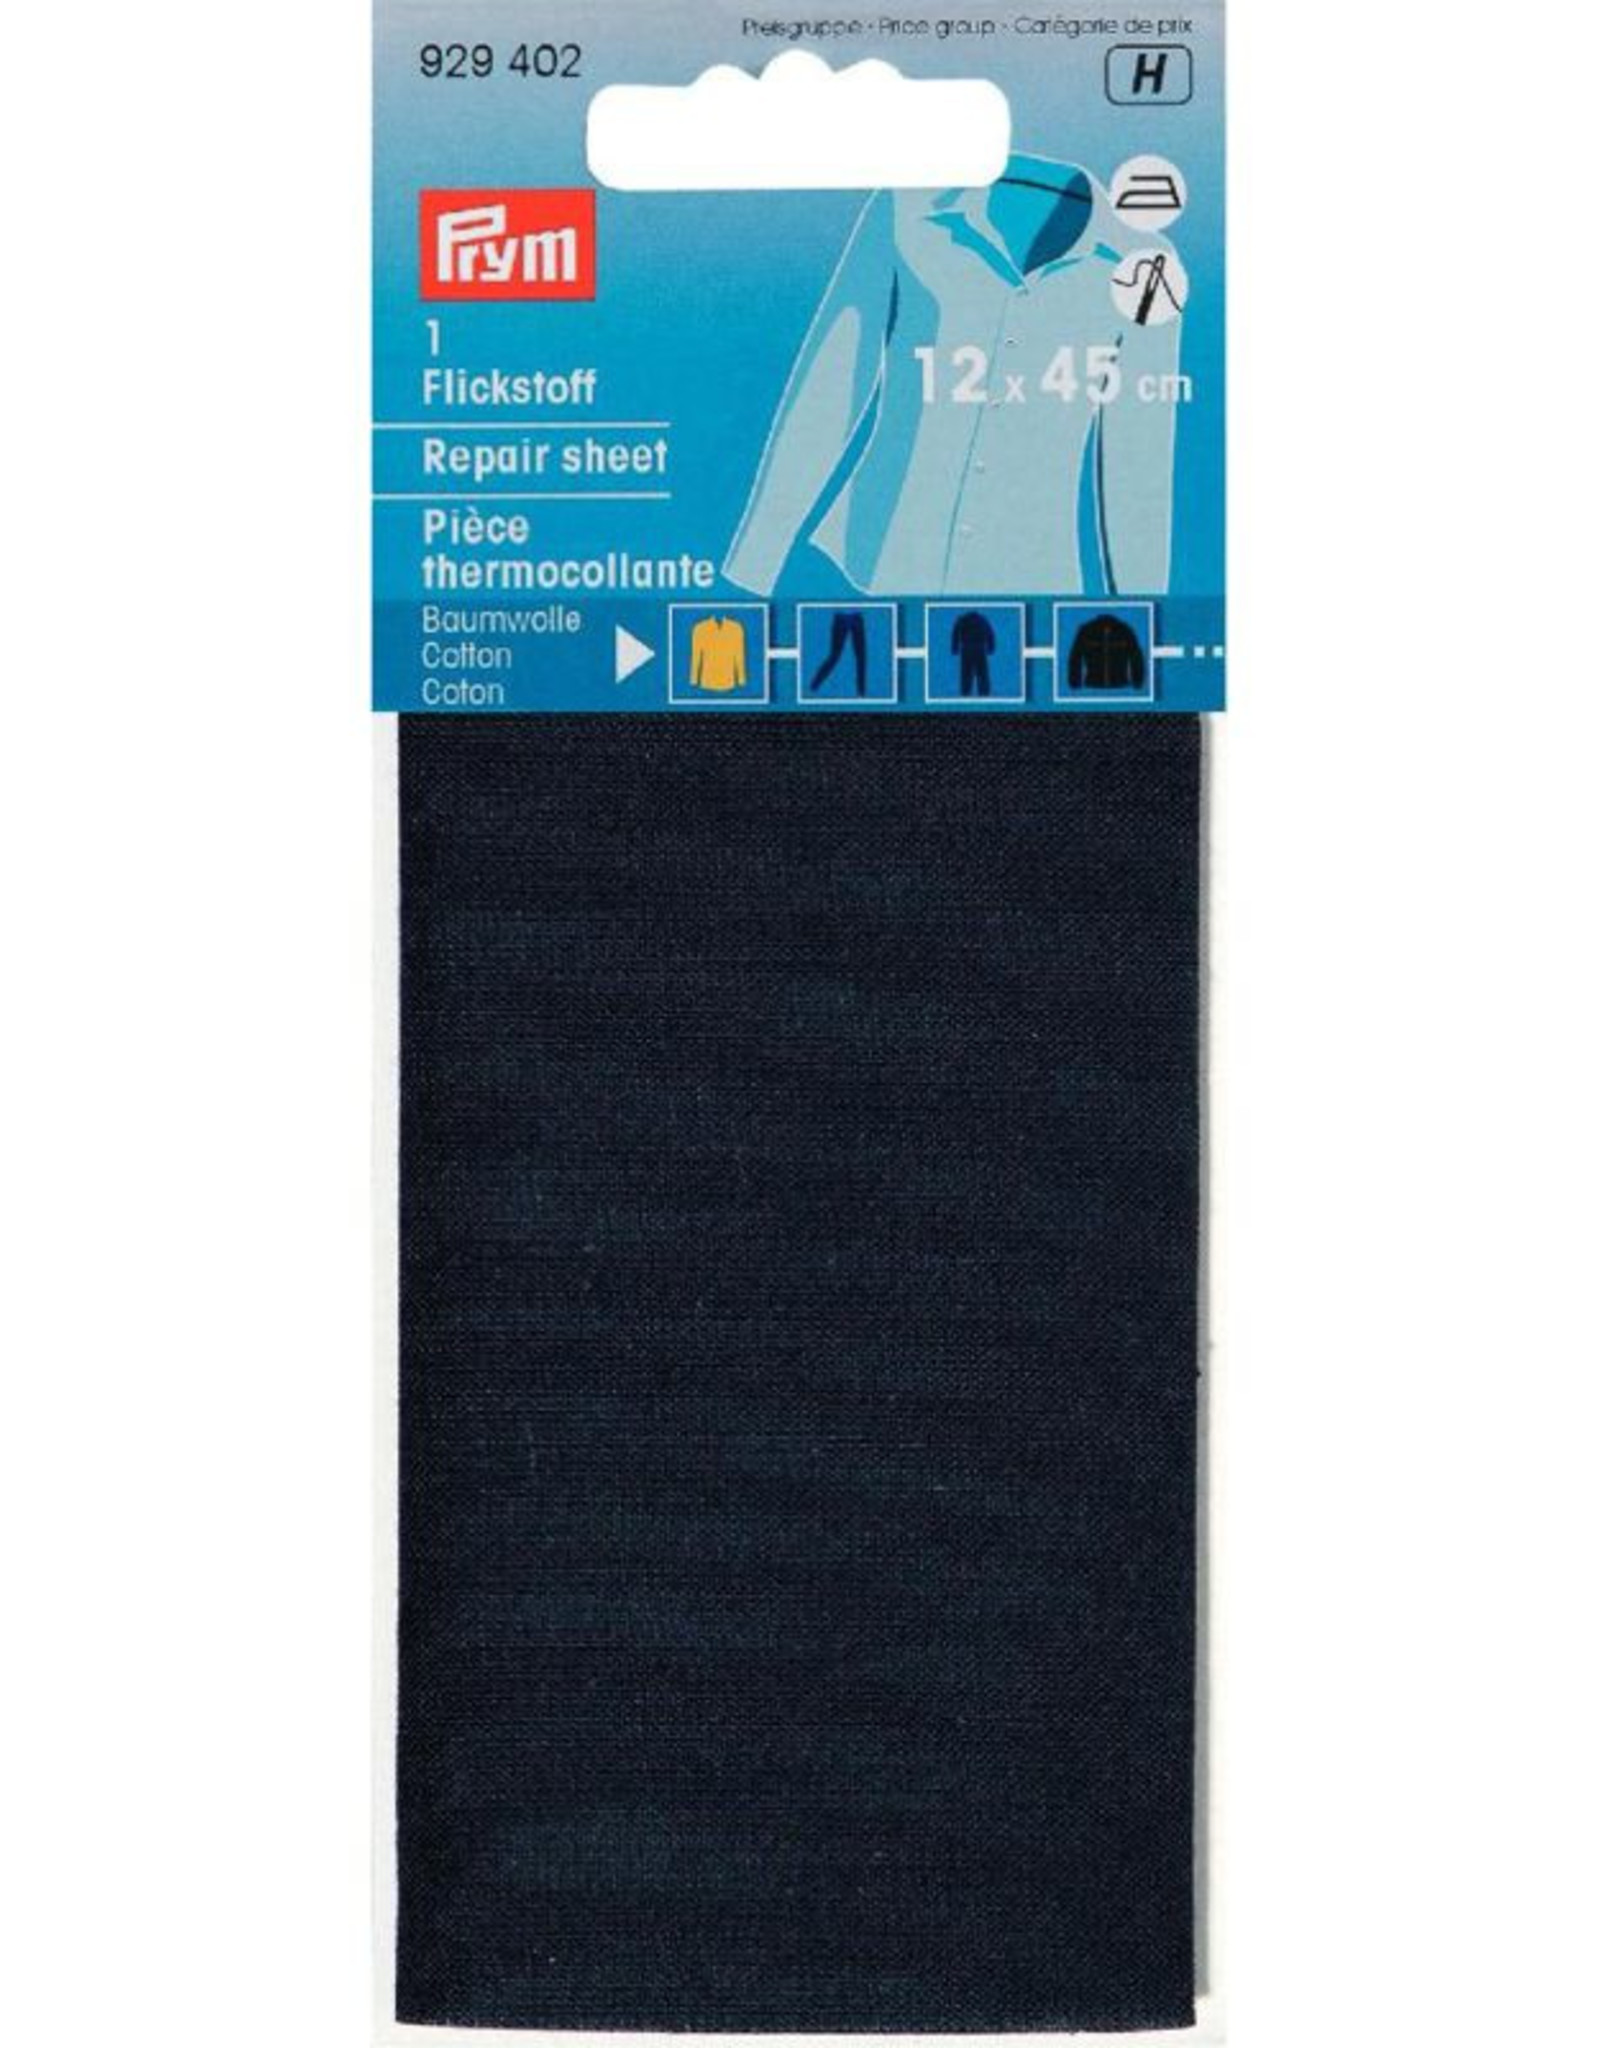 Prym prym - verstelstuk katoen donker blauw 12x45 cm - 929 402